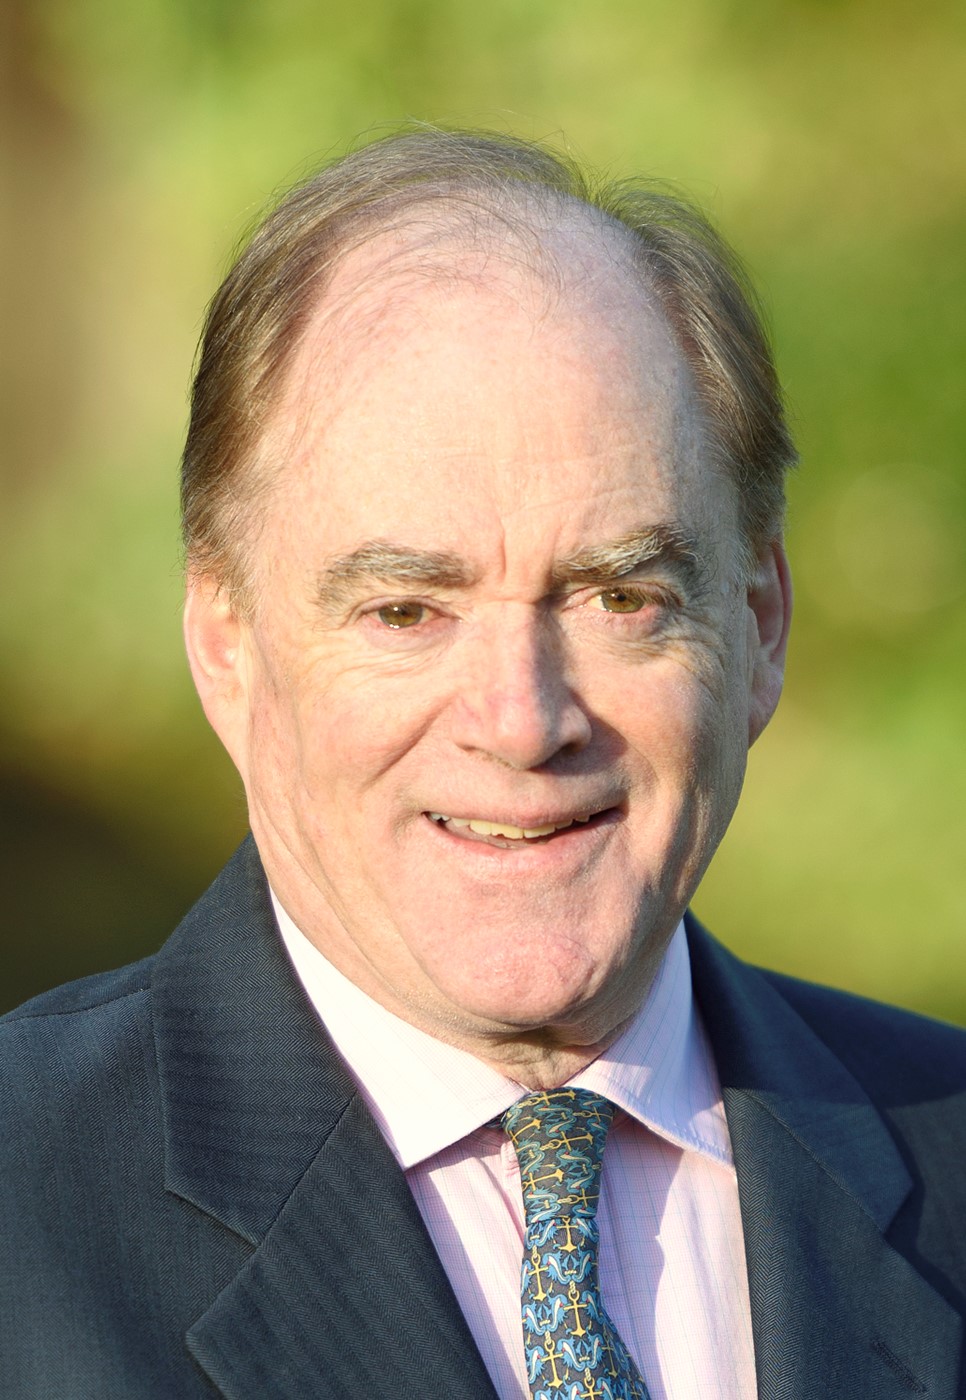 Mark Hewlet, Chief Executive Castleacre Insurance